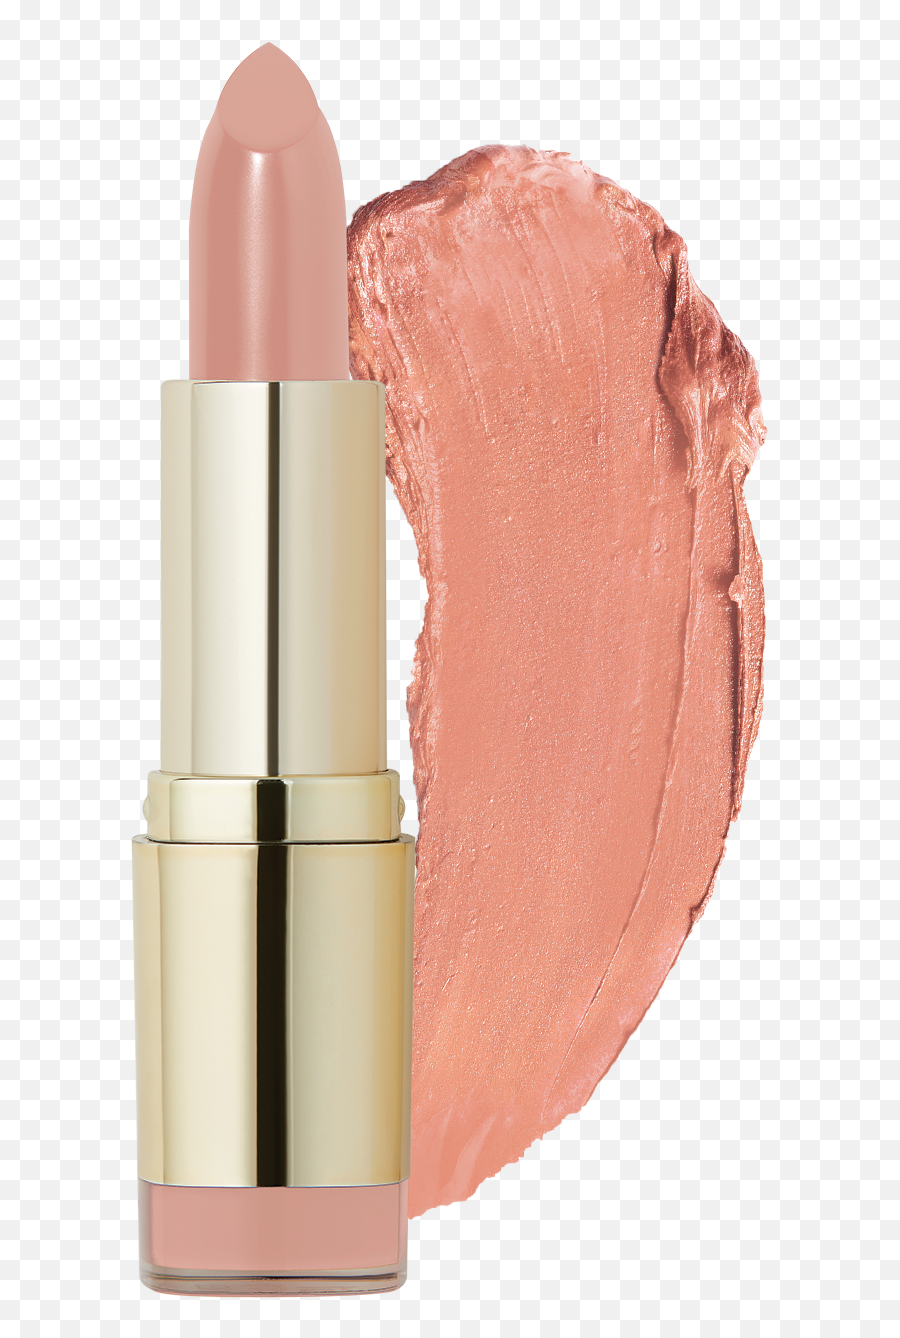 Milani Cosmetics - Lip Care Emoji,Lipstick Png